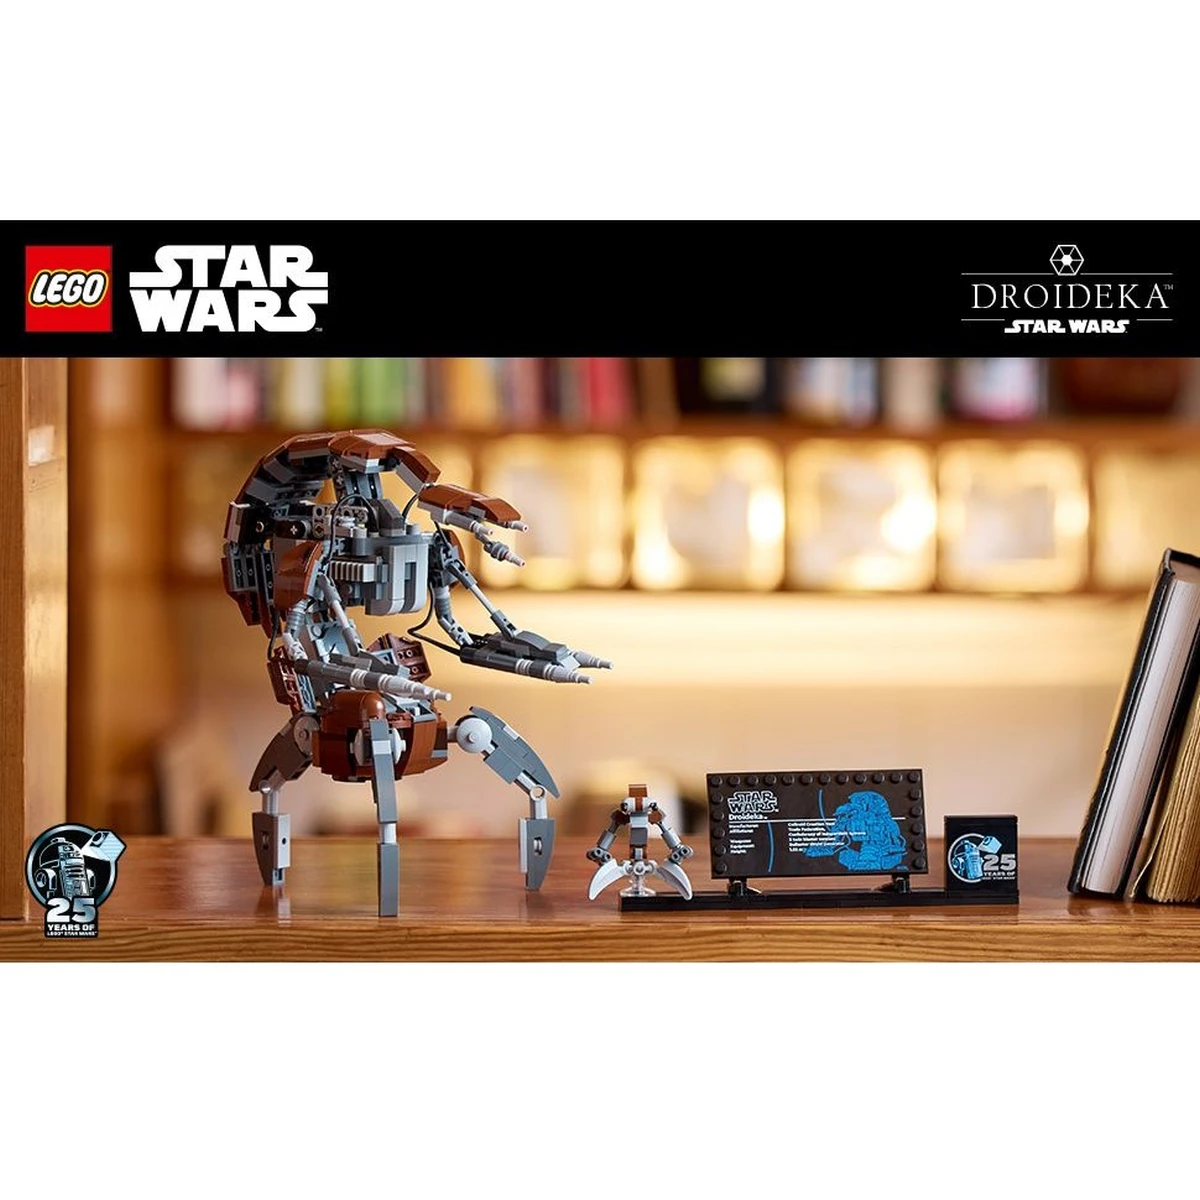 LEGO® Star Wars Droideka 75381